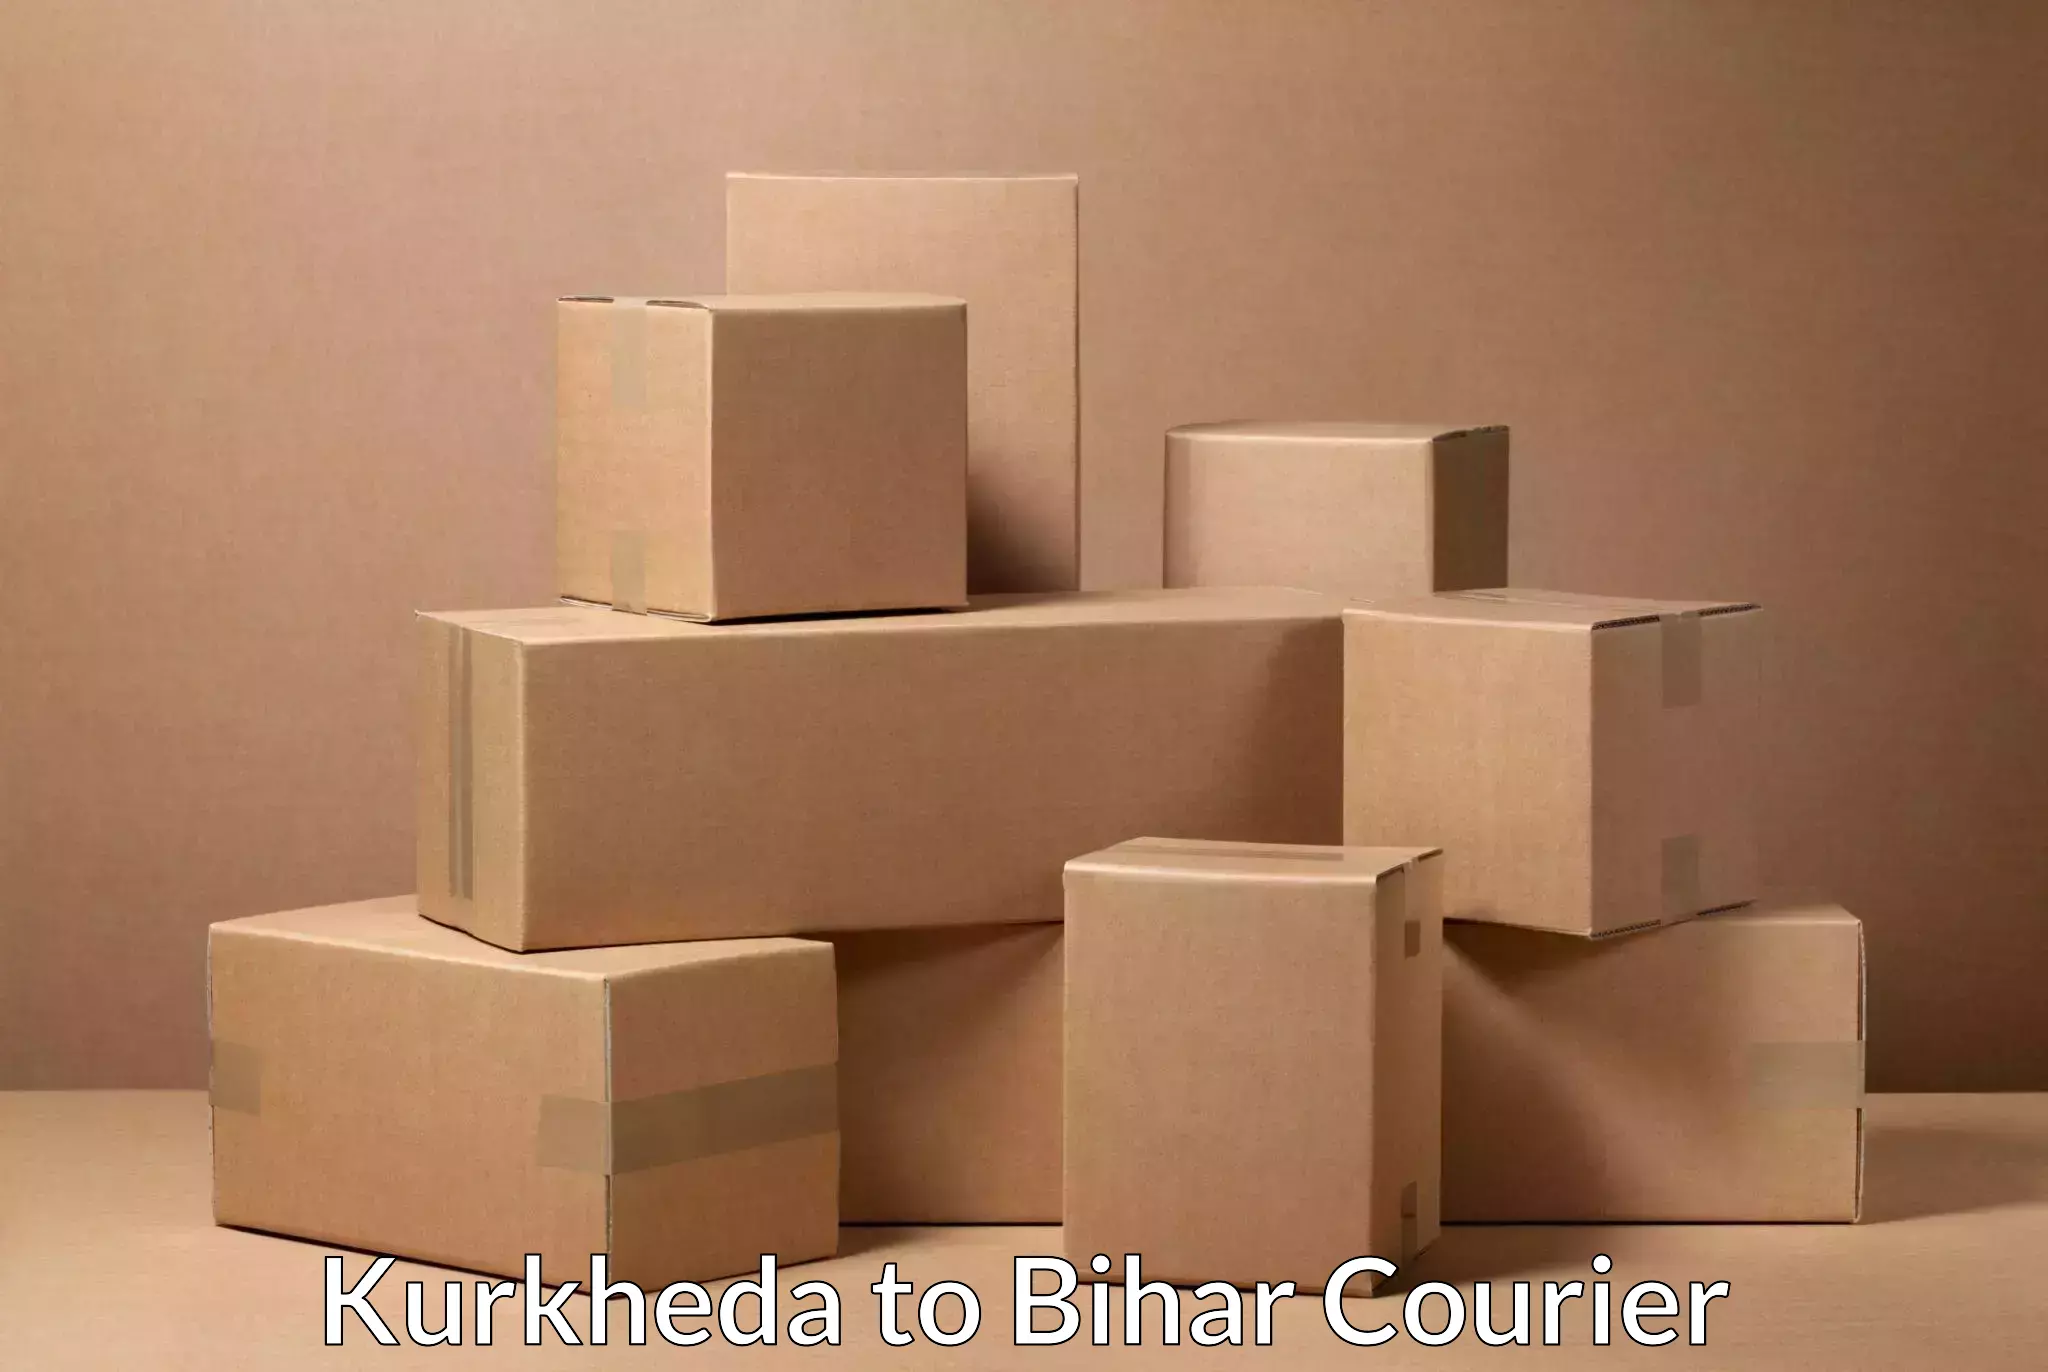 State-of-the-art courier technology Kurkheda to Dinara